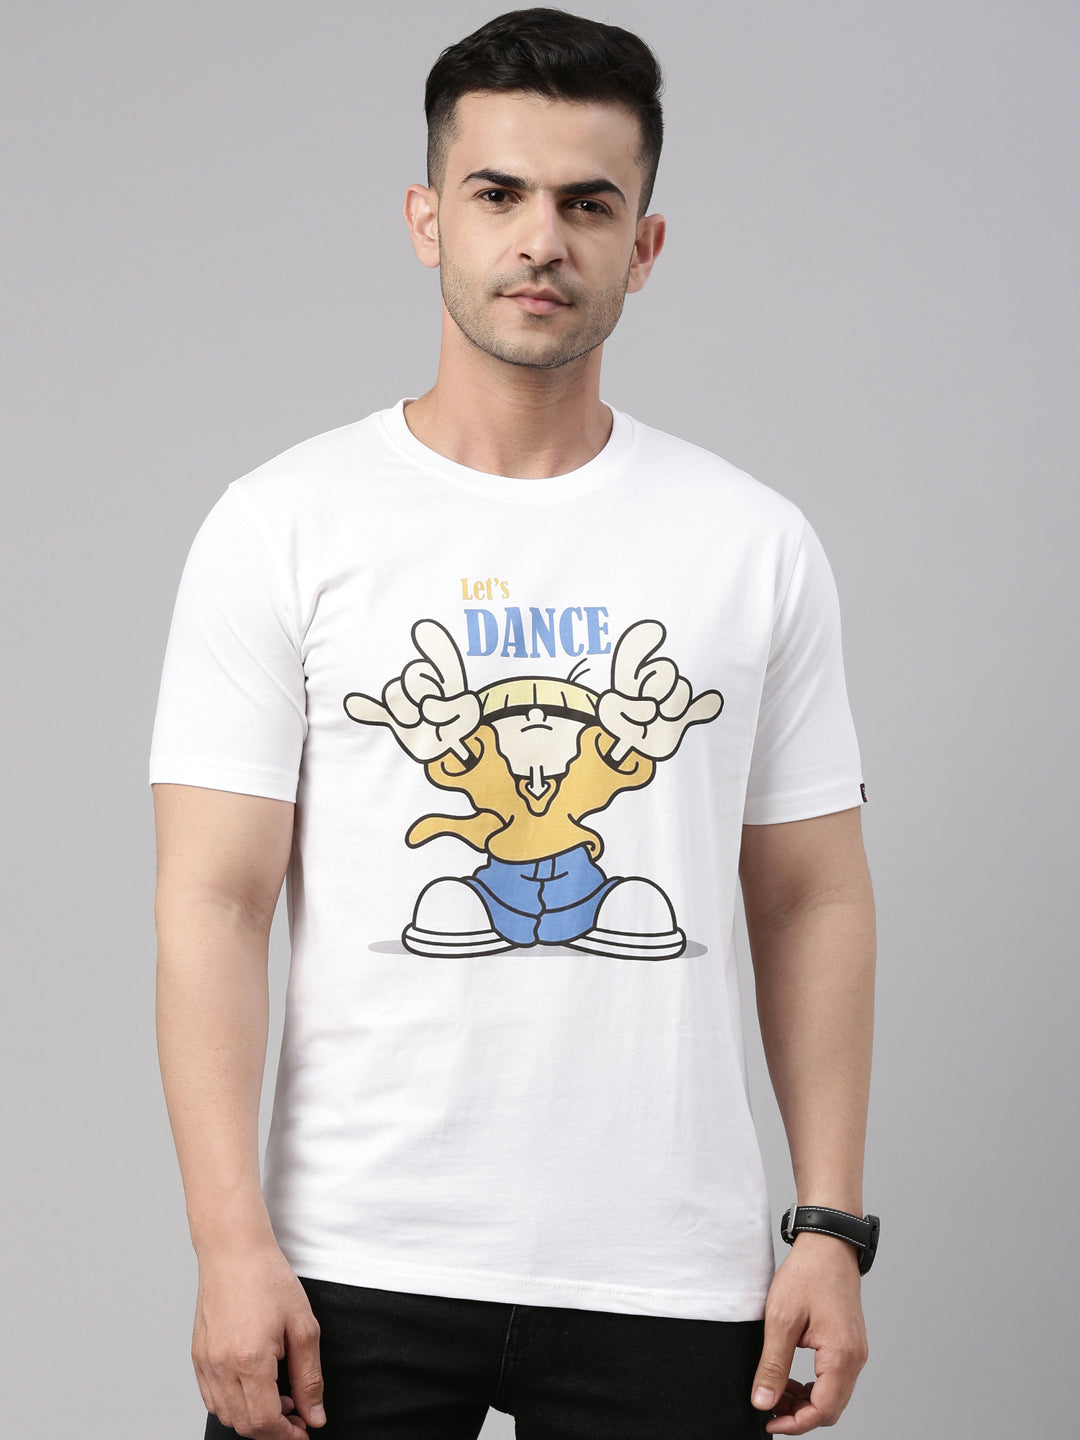 Lets Dance T Shirt Graphic T-Shirts Bushirt   